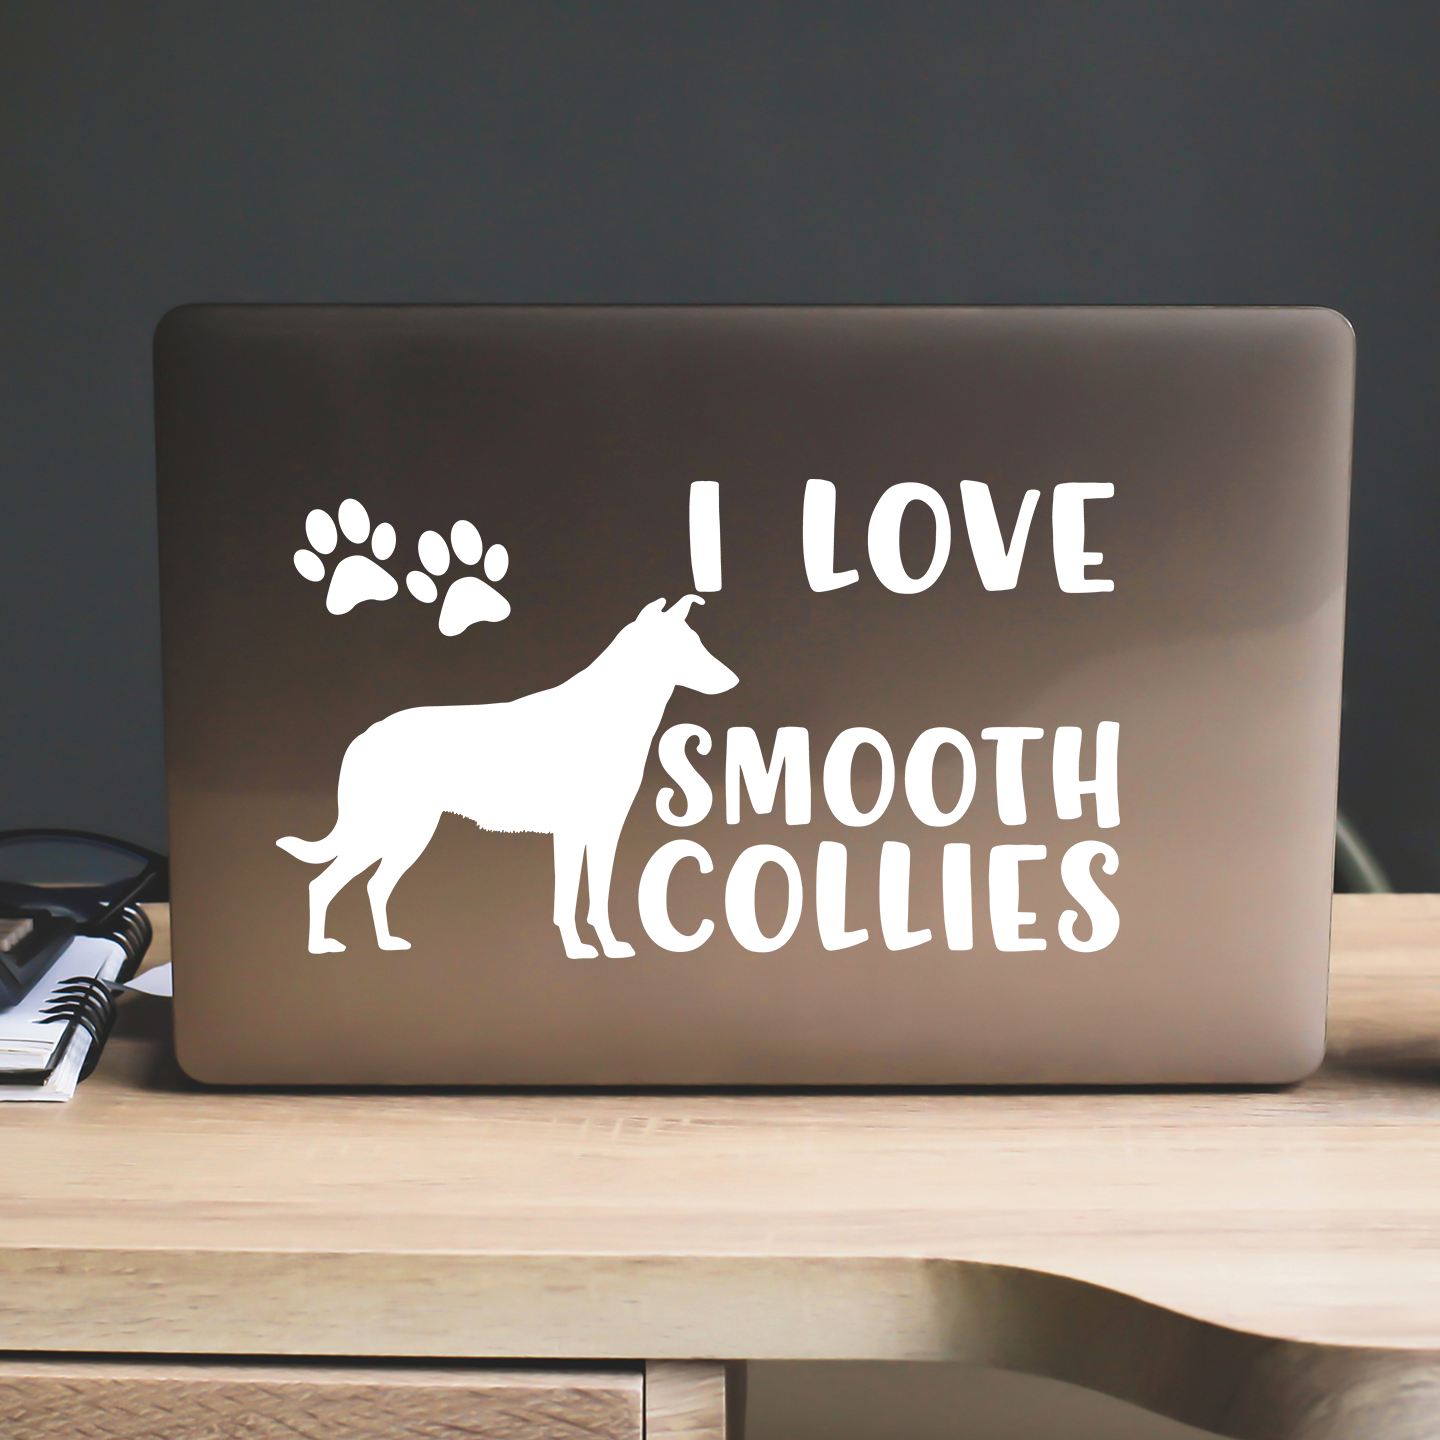 I Love Smooth Collies Sticker